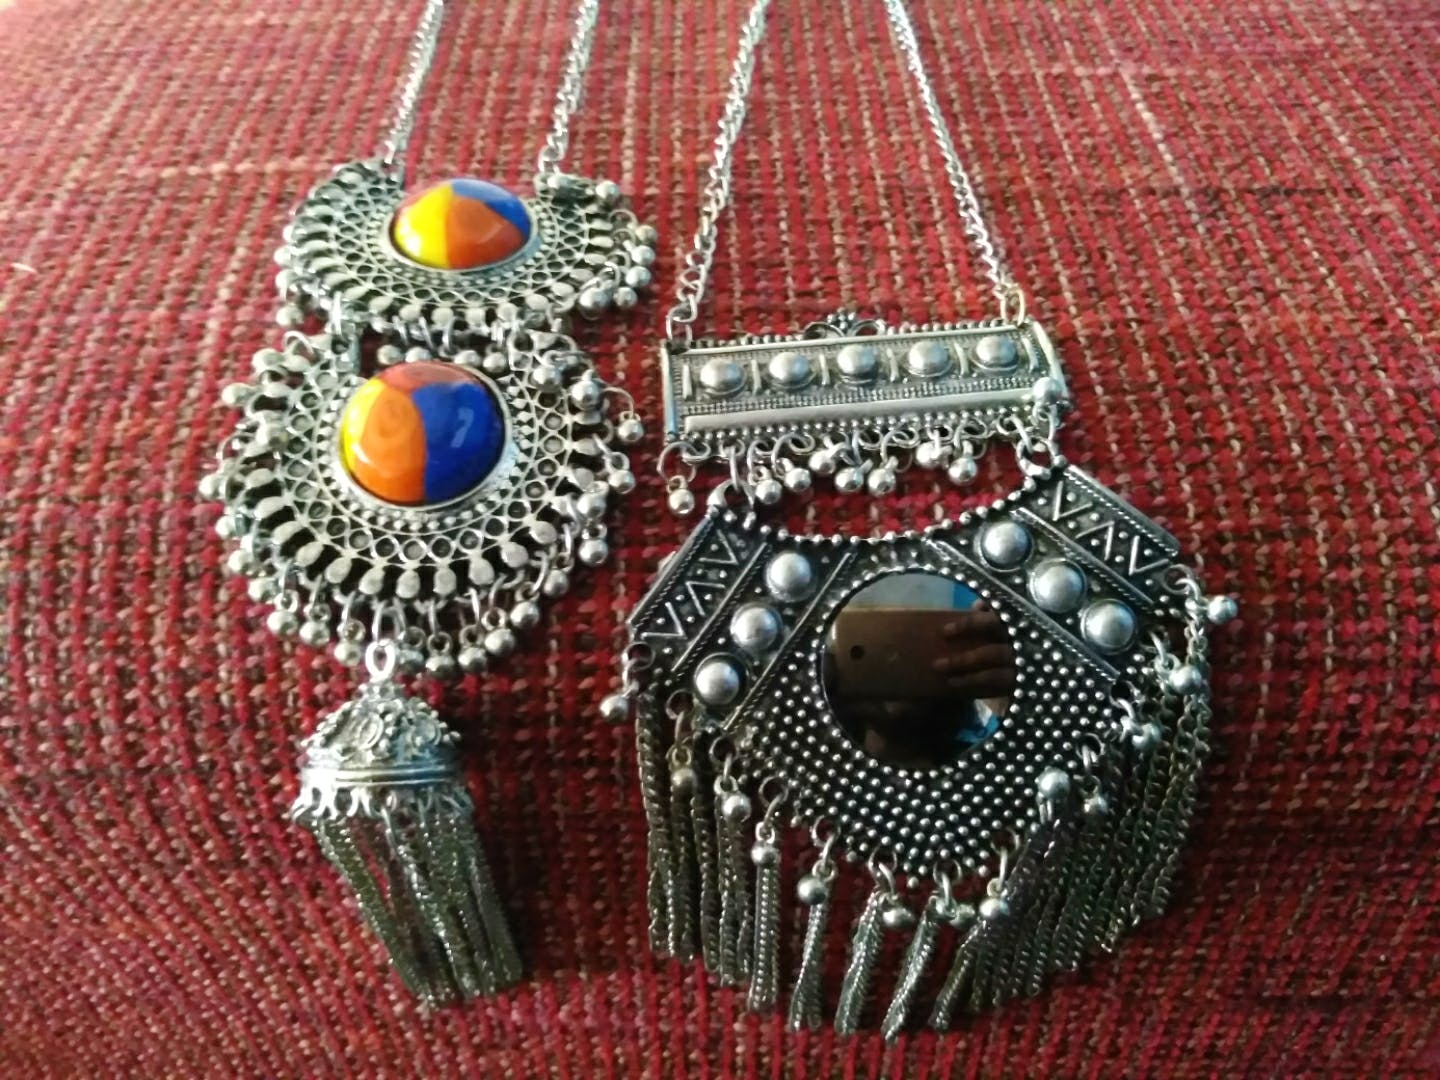 Jewellery,Fashion accessory,Gemstone,Earrings,Silver,Silver,Metal,Pendant,Turquoise,Jewelry making